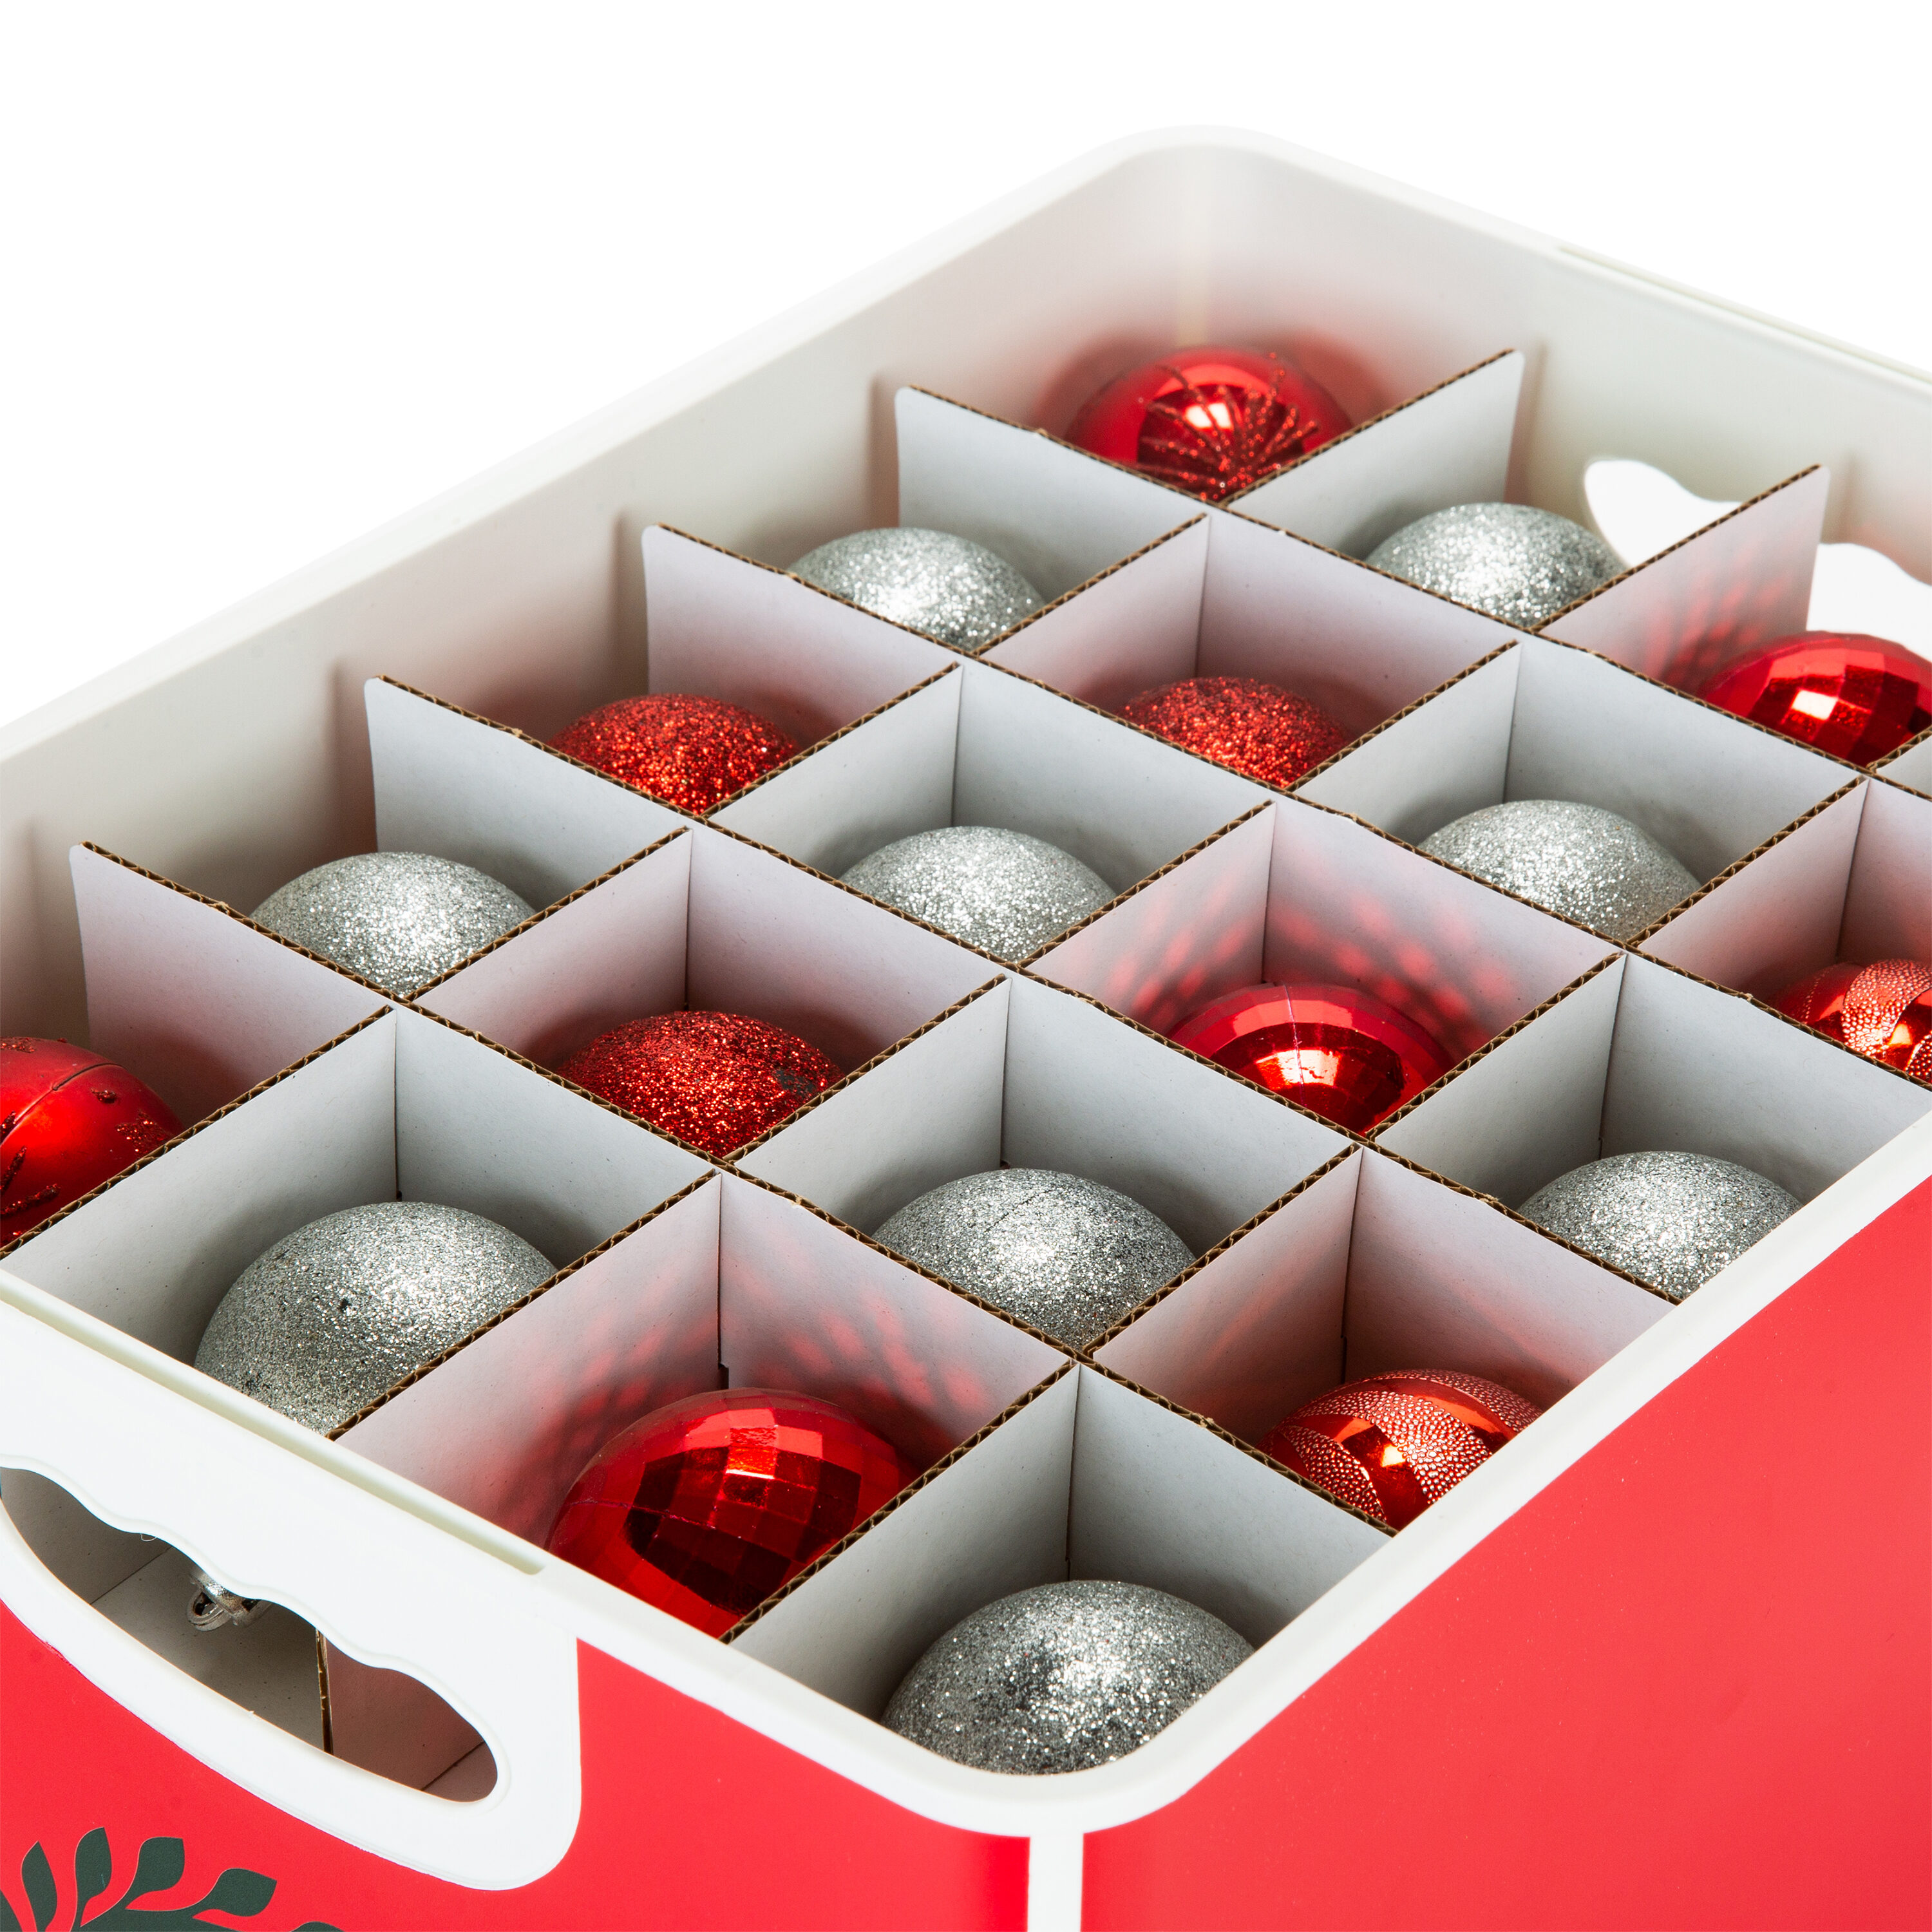 Simplify Ornament Storage Box/Plastic - Decorative Organizer - Storage Bin  - Red - 112 Counts - L12 x W12 x